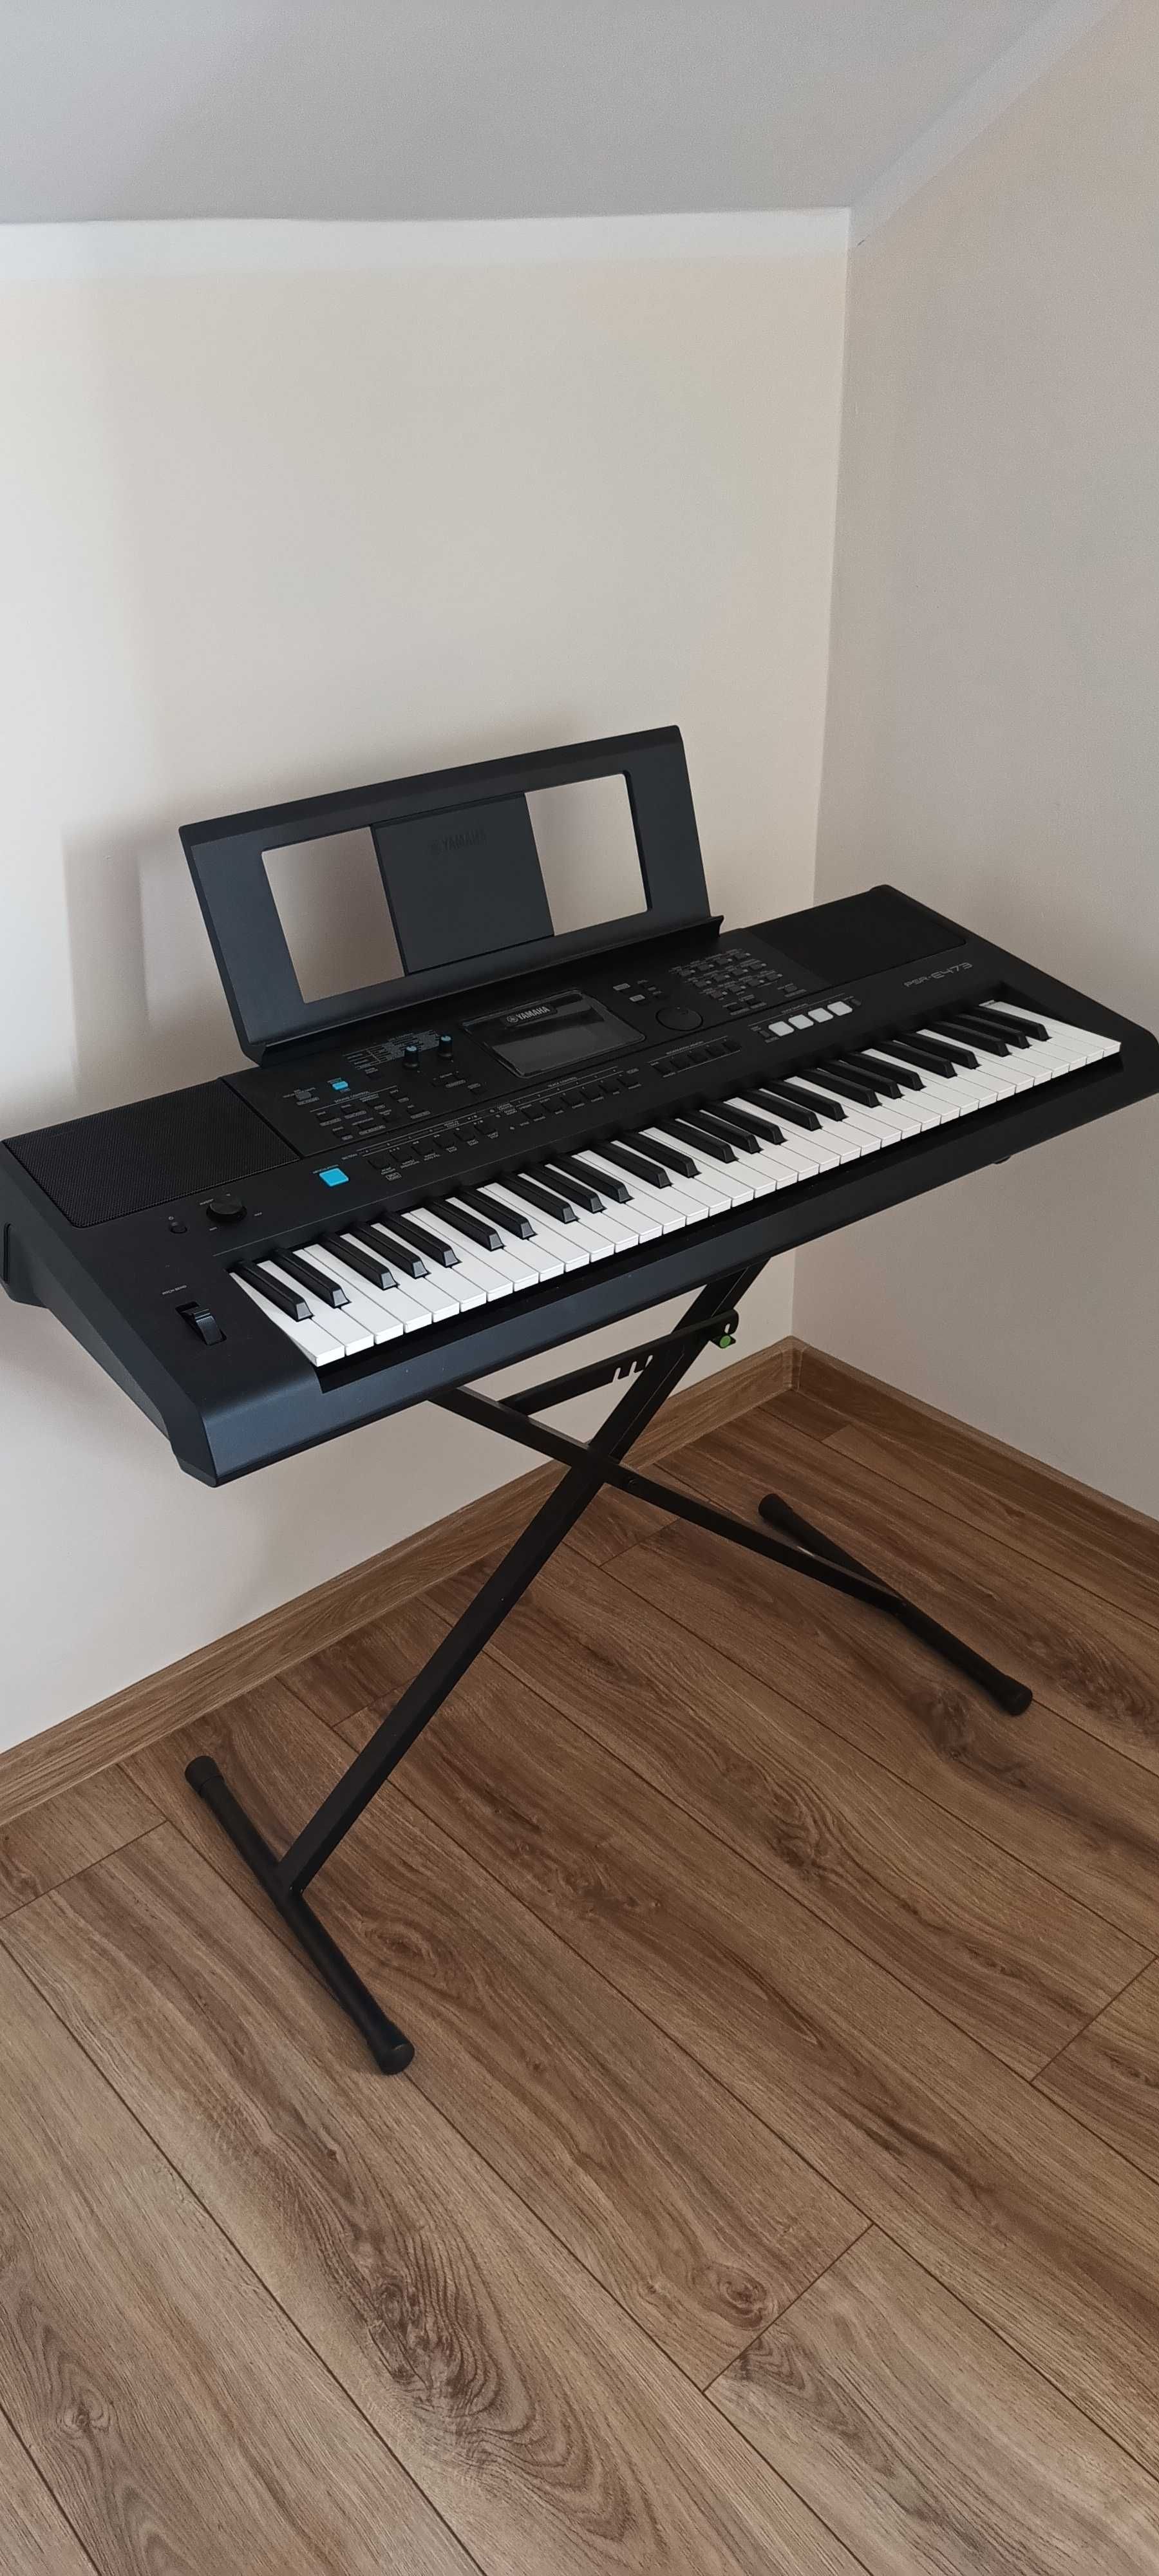 Yamaha psr-e473 keyboard jak nowy + torba + stojak